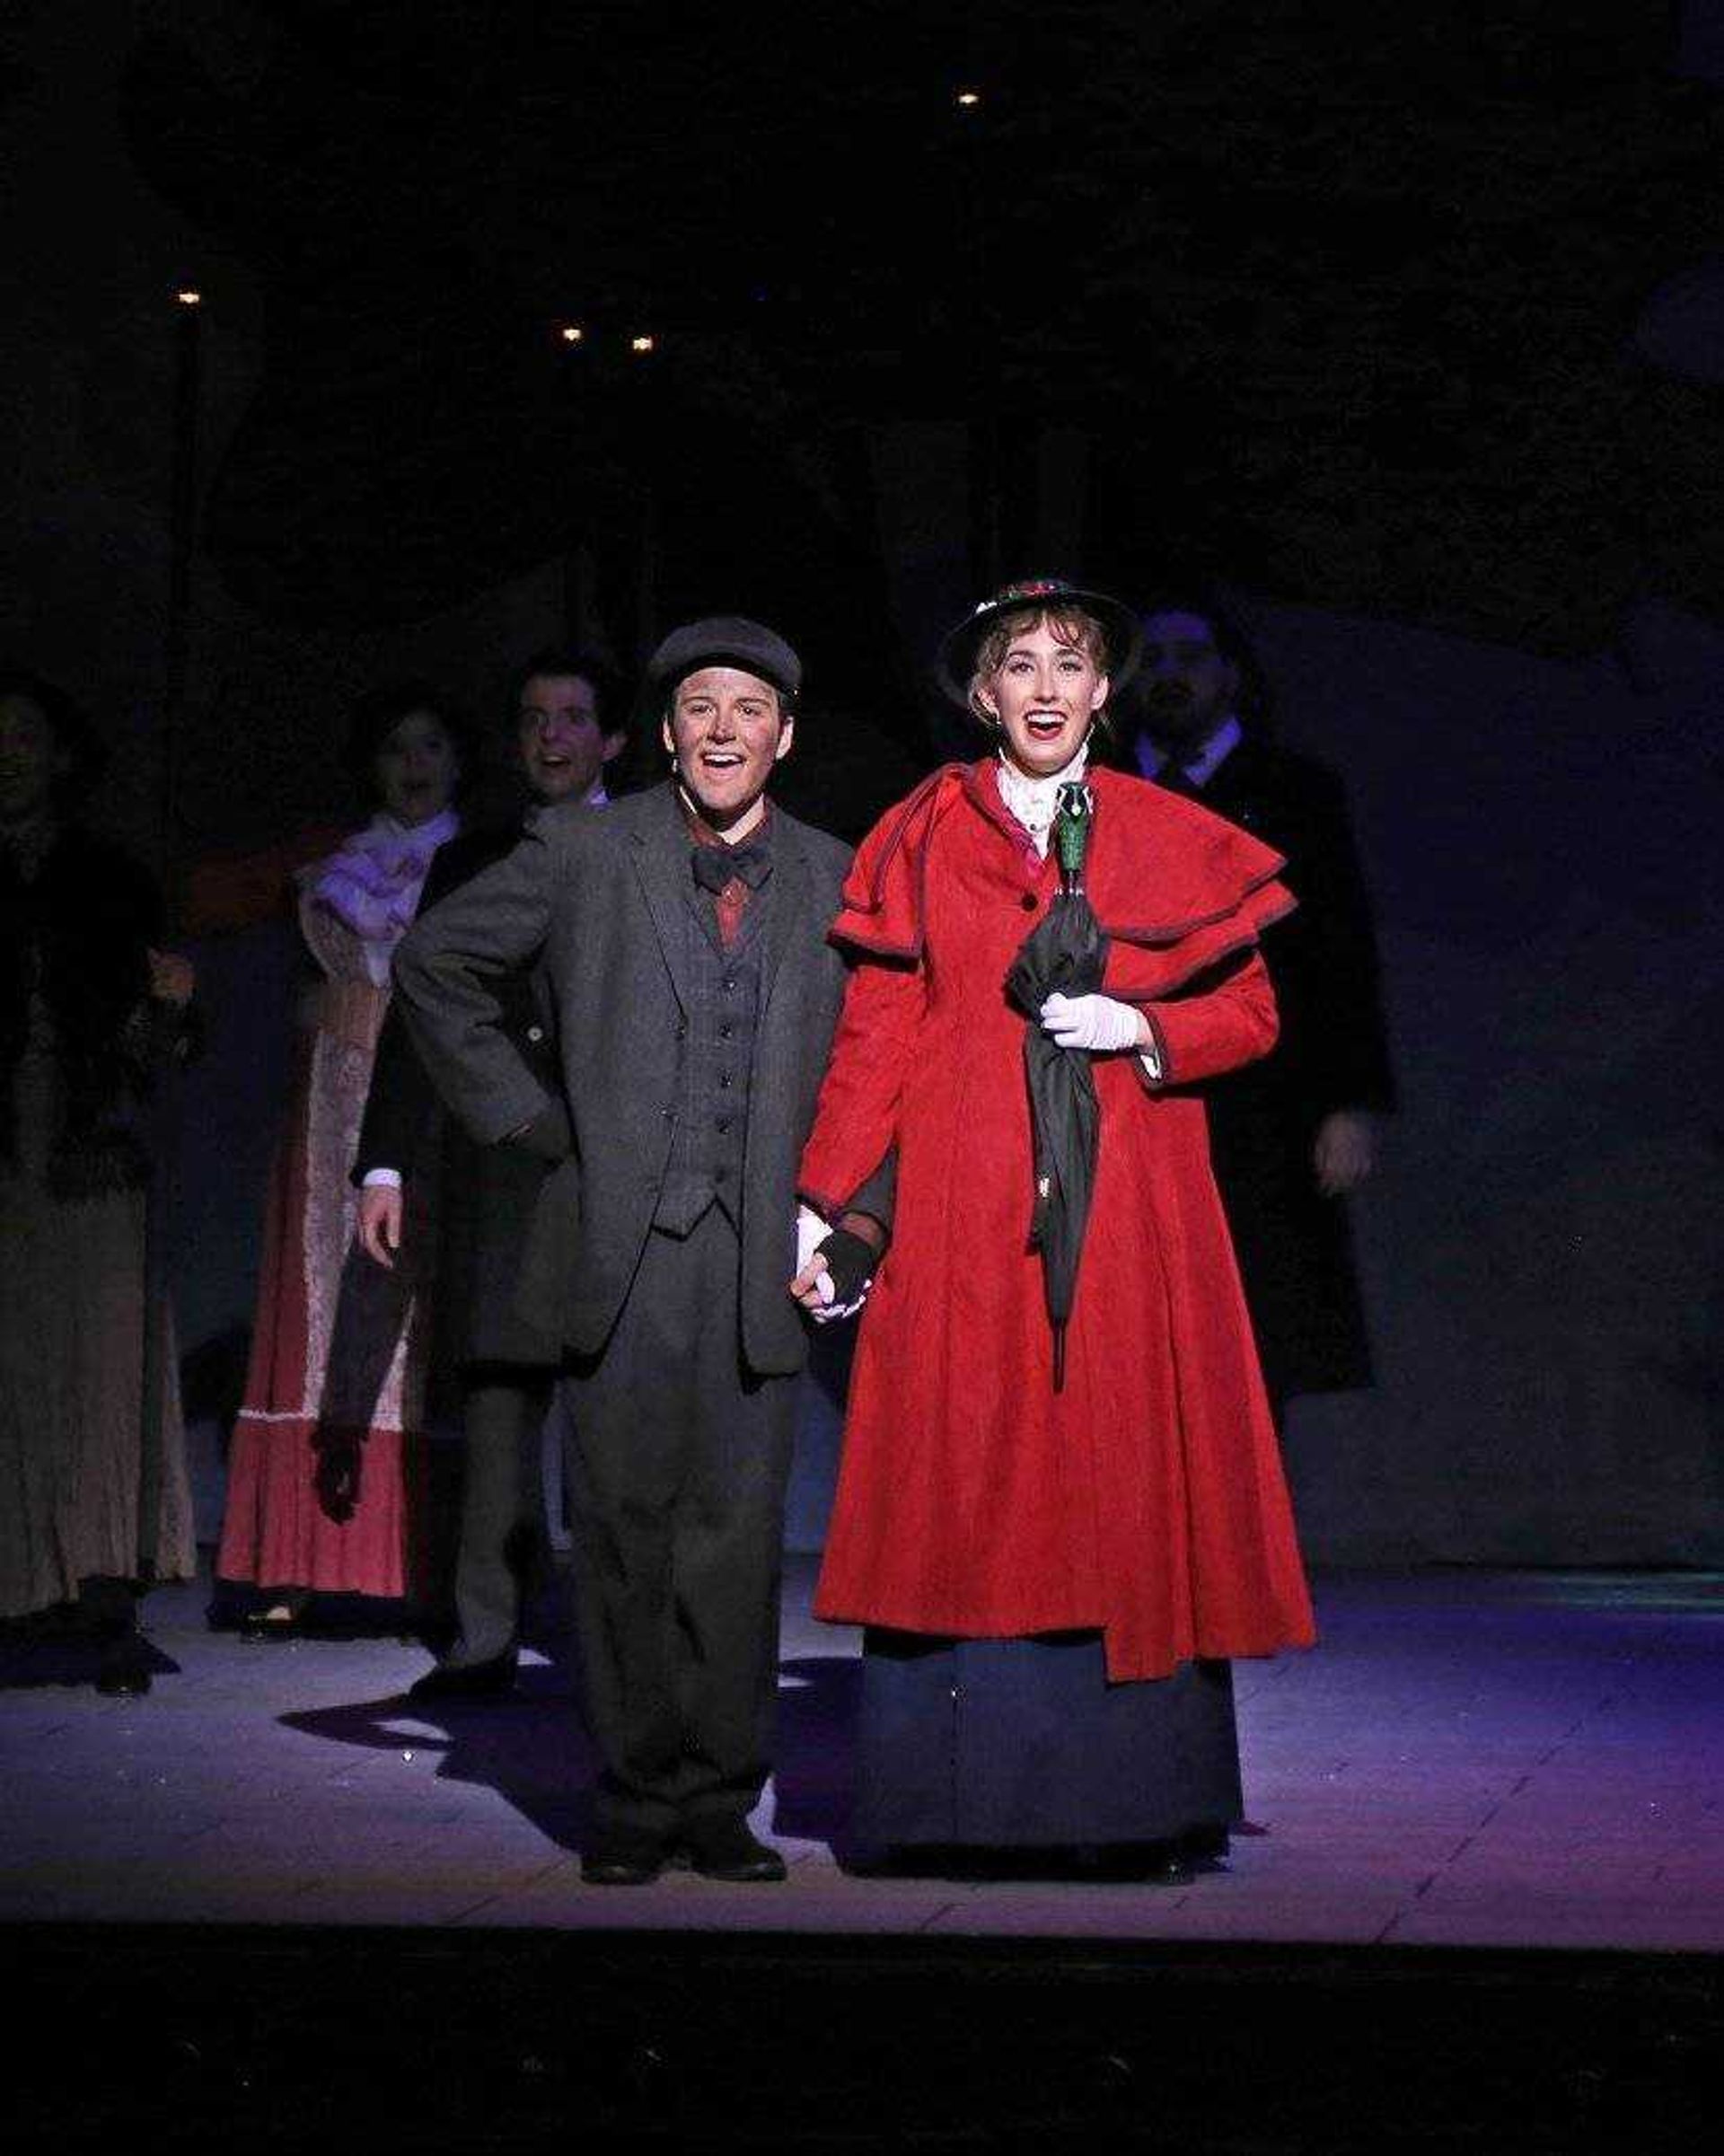 Jose Alpizar and Abigail Alsmeyer in “Mary Poppins.”